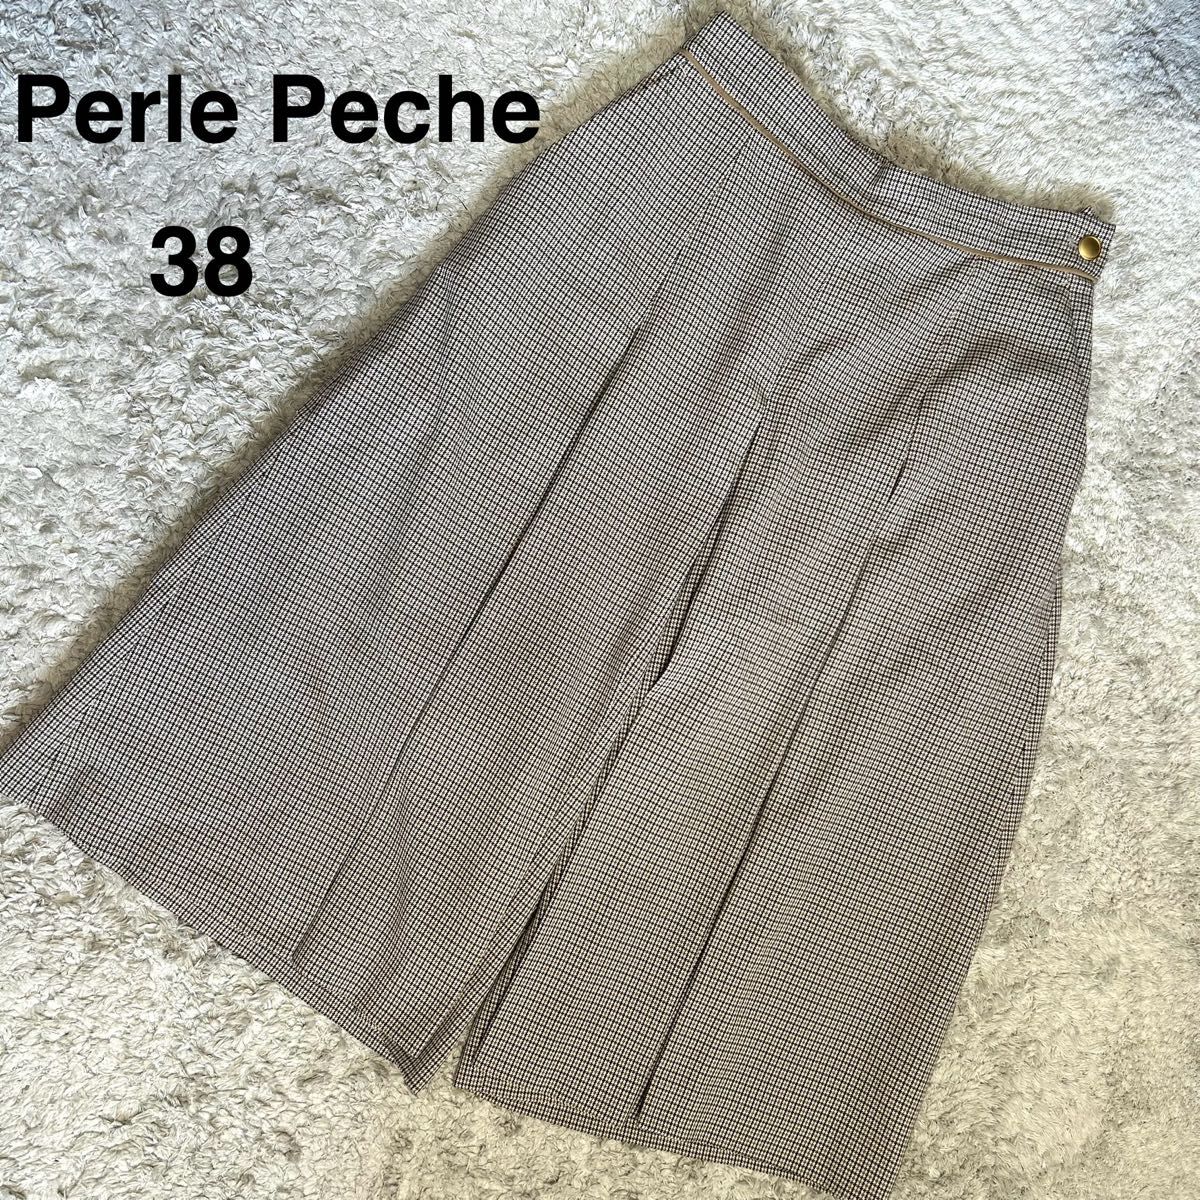 Perle Peche ペルルペッシュ ガウチョパンツ ワイドパンツ スカーチョ 千鳥格子 日本製 38